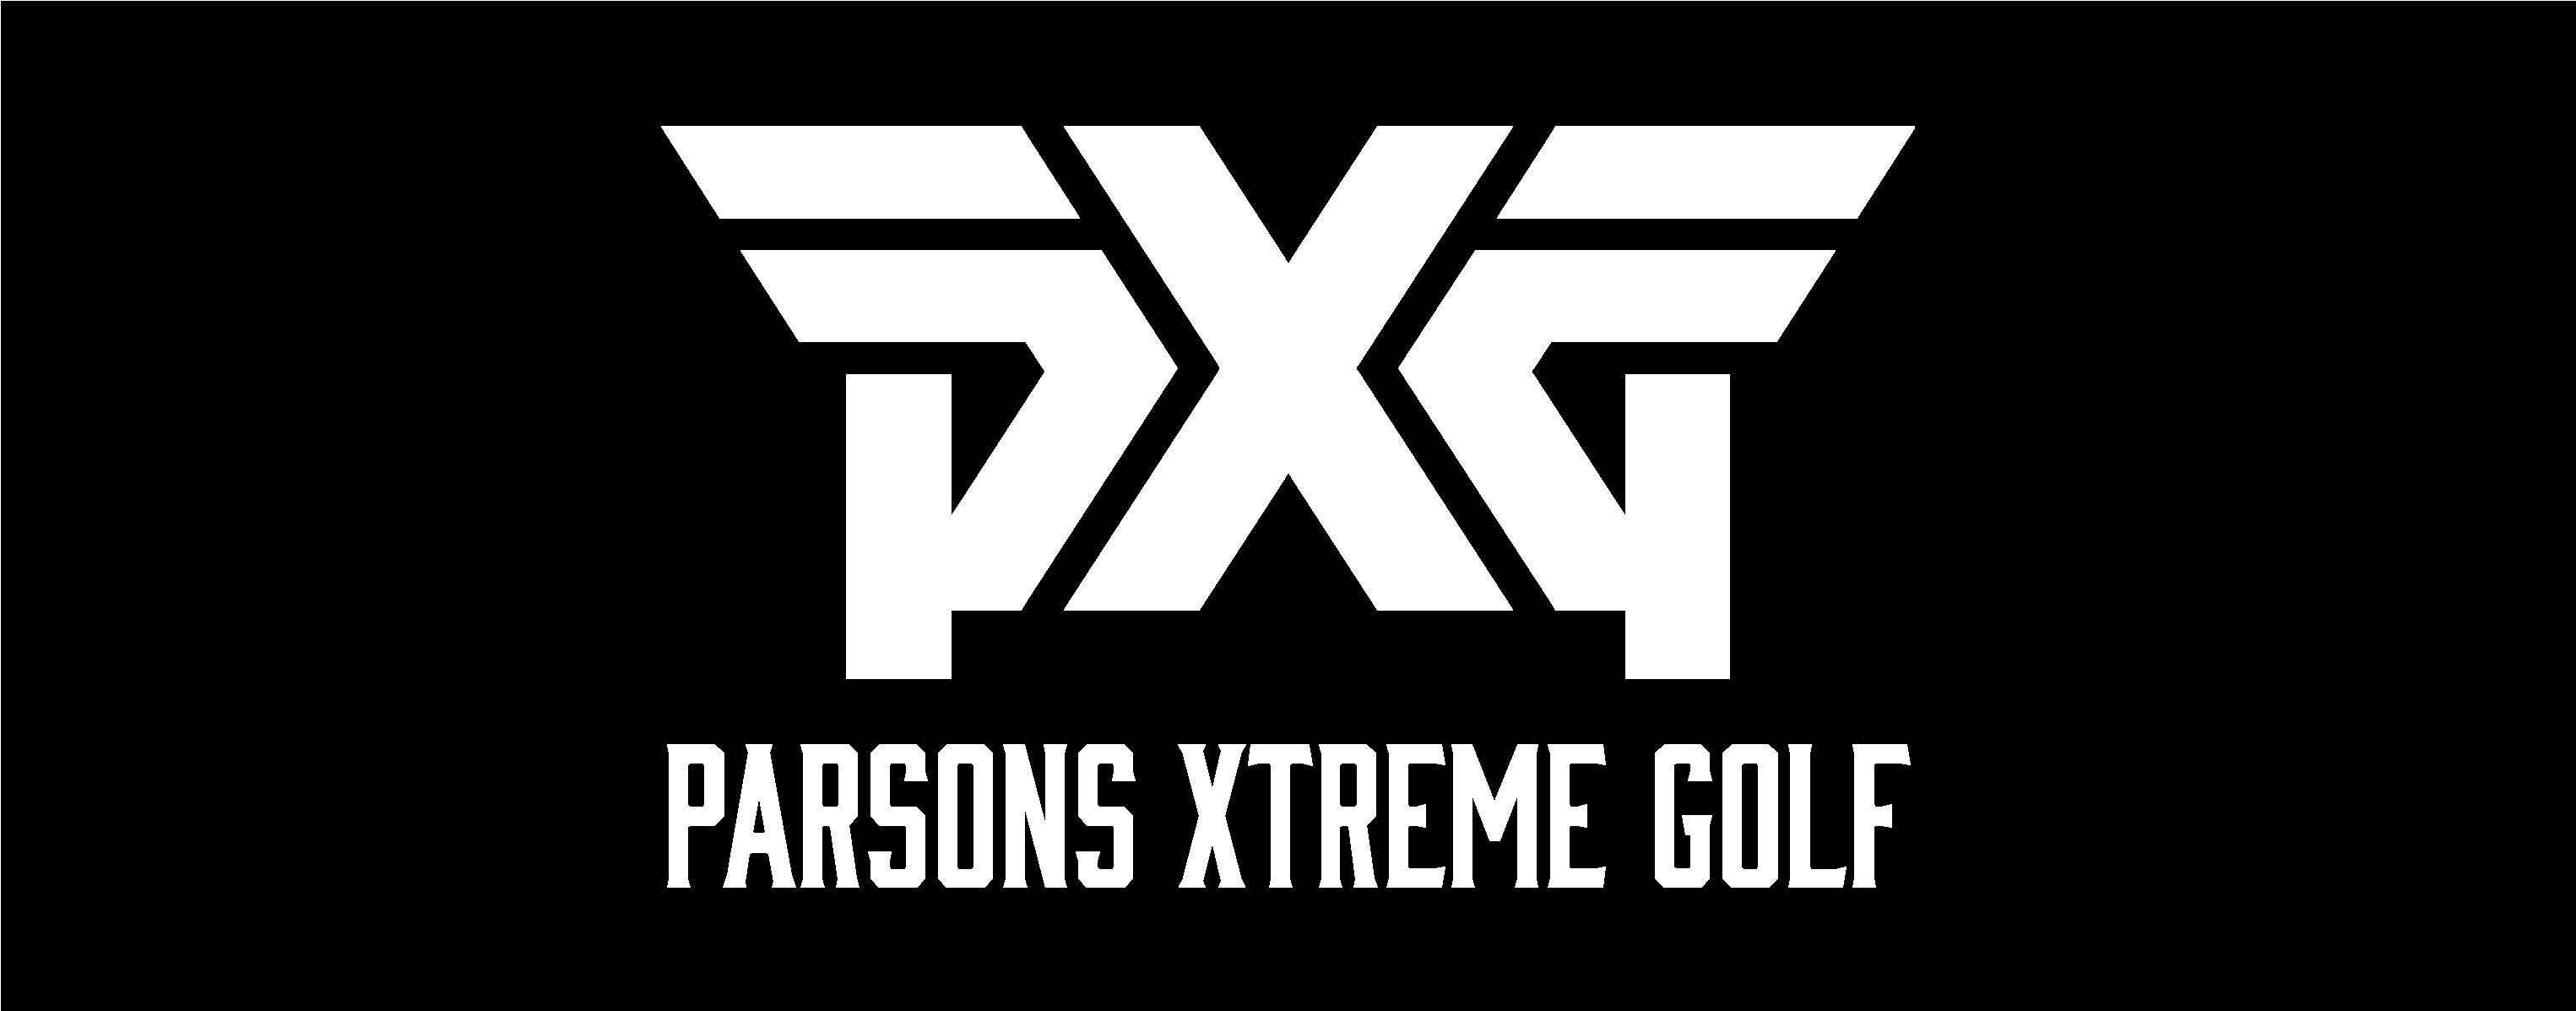 Pxg Logo - Core Golf. PXG. Parsons Xtreme Golf